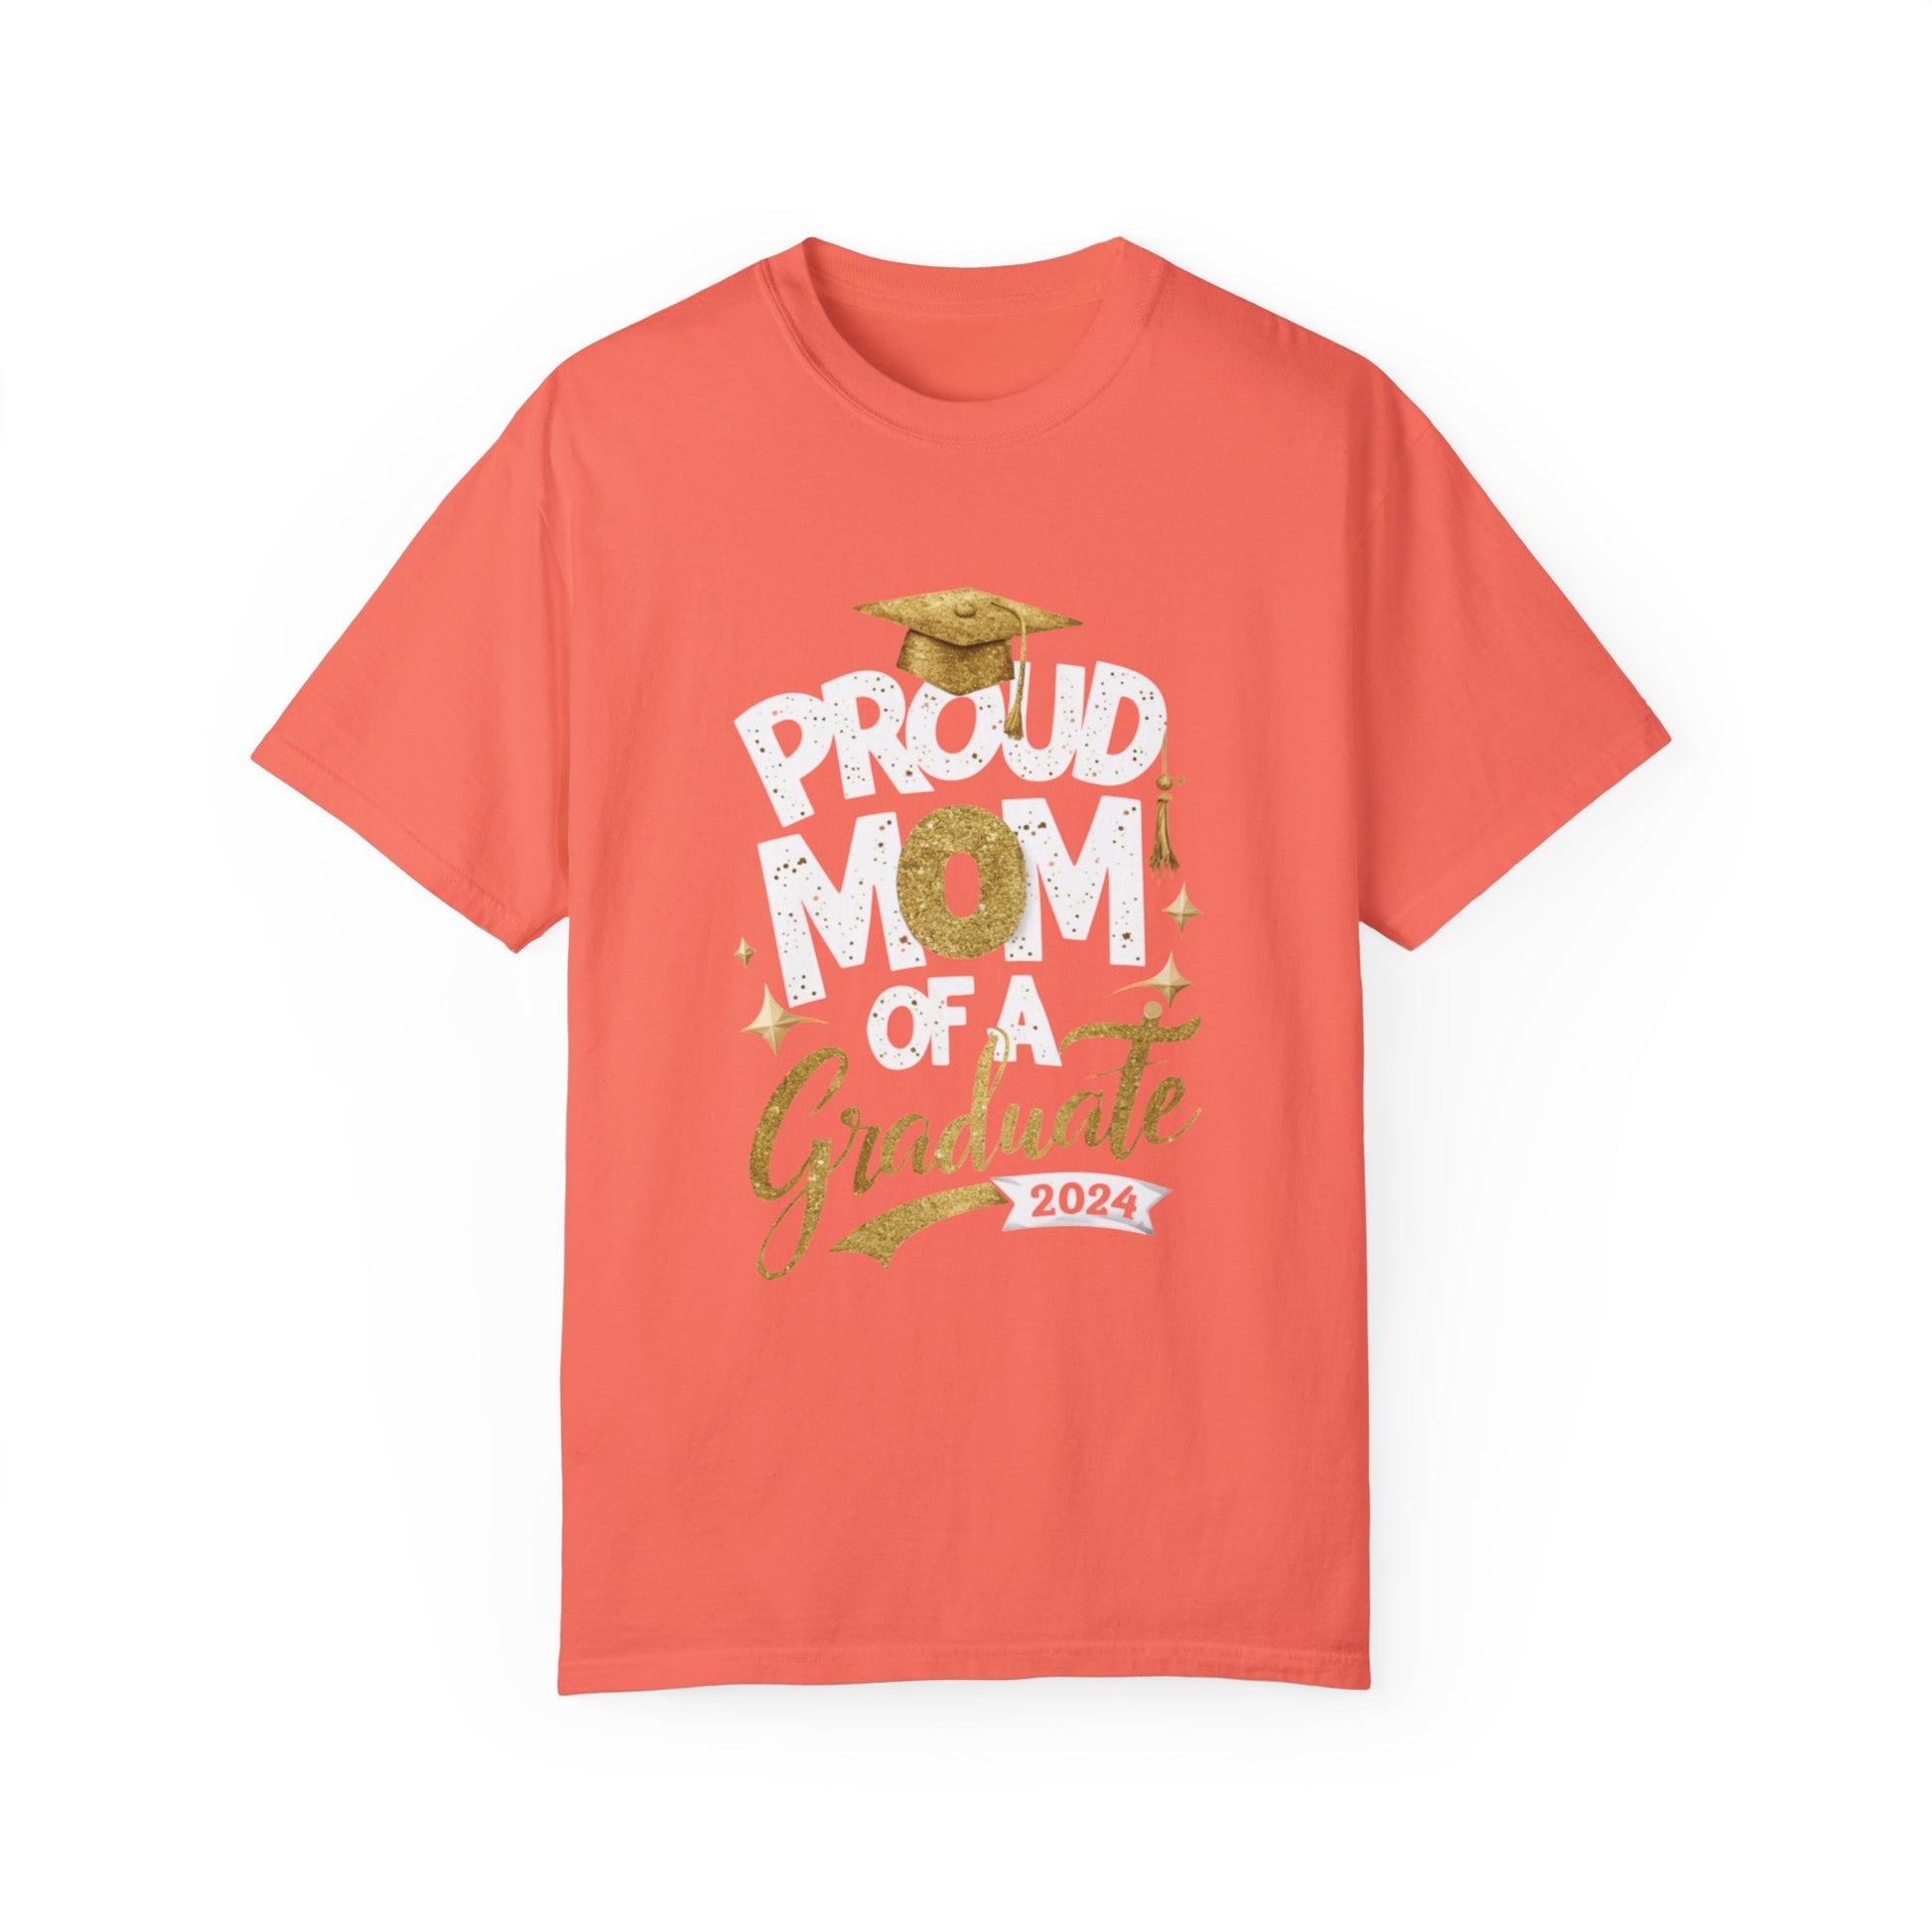 Proud Mom of a 2024 Graduate Unisex Garment-dyed T-shirt Cotton Funny Humorous Graphic Soft Premium Unisex Men Women Bright Salmon T-shirt Birthday Gift-6